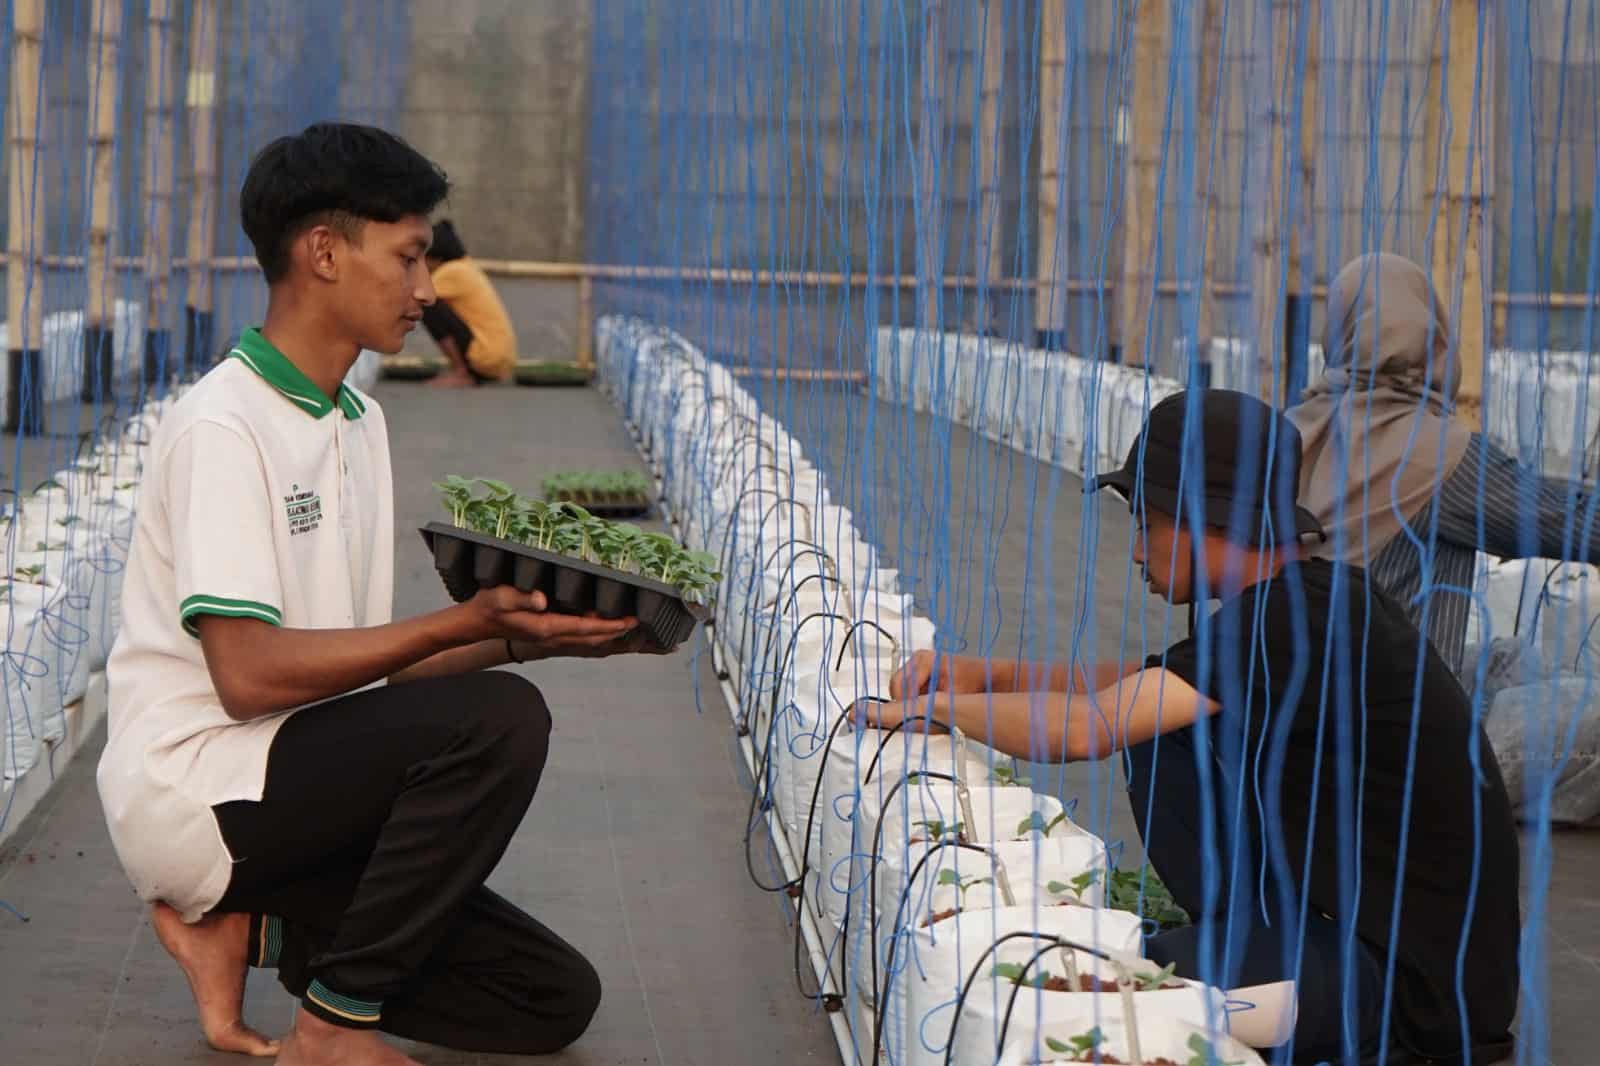 transplanting hydroponic melon seeds